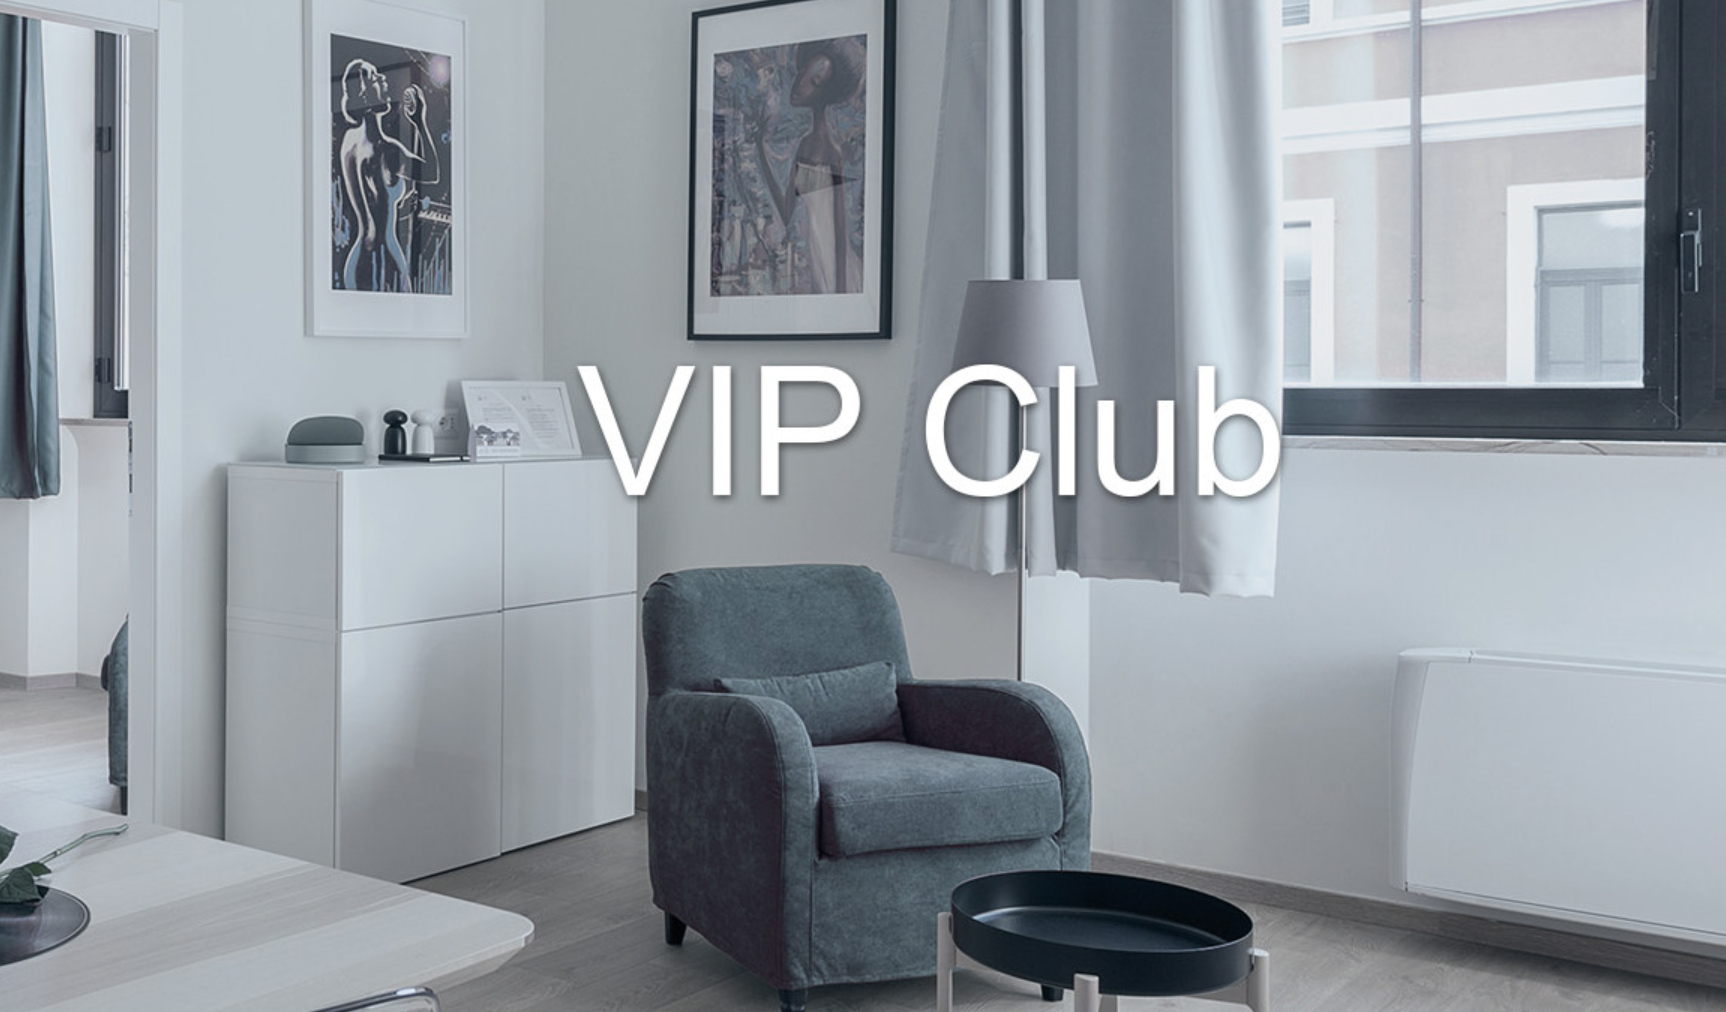 Koogeek VIP Club